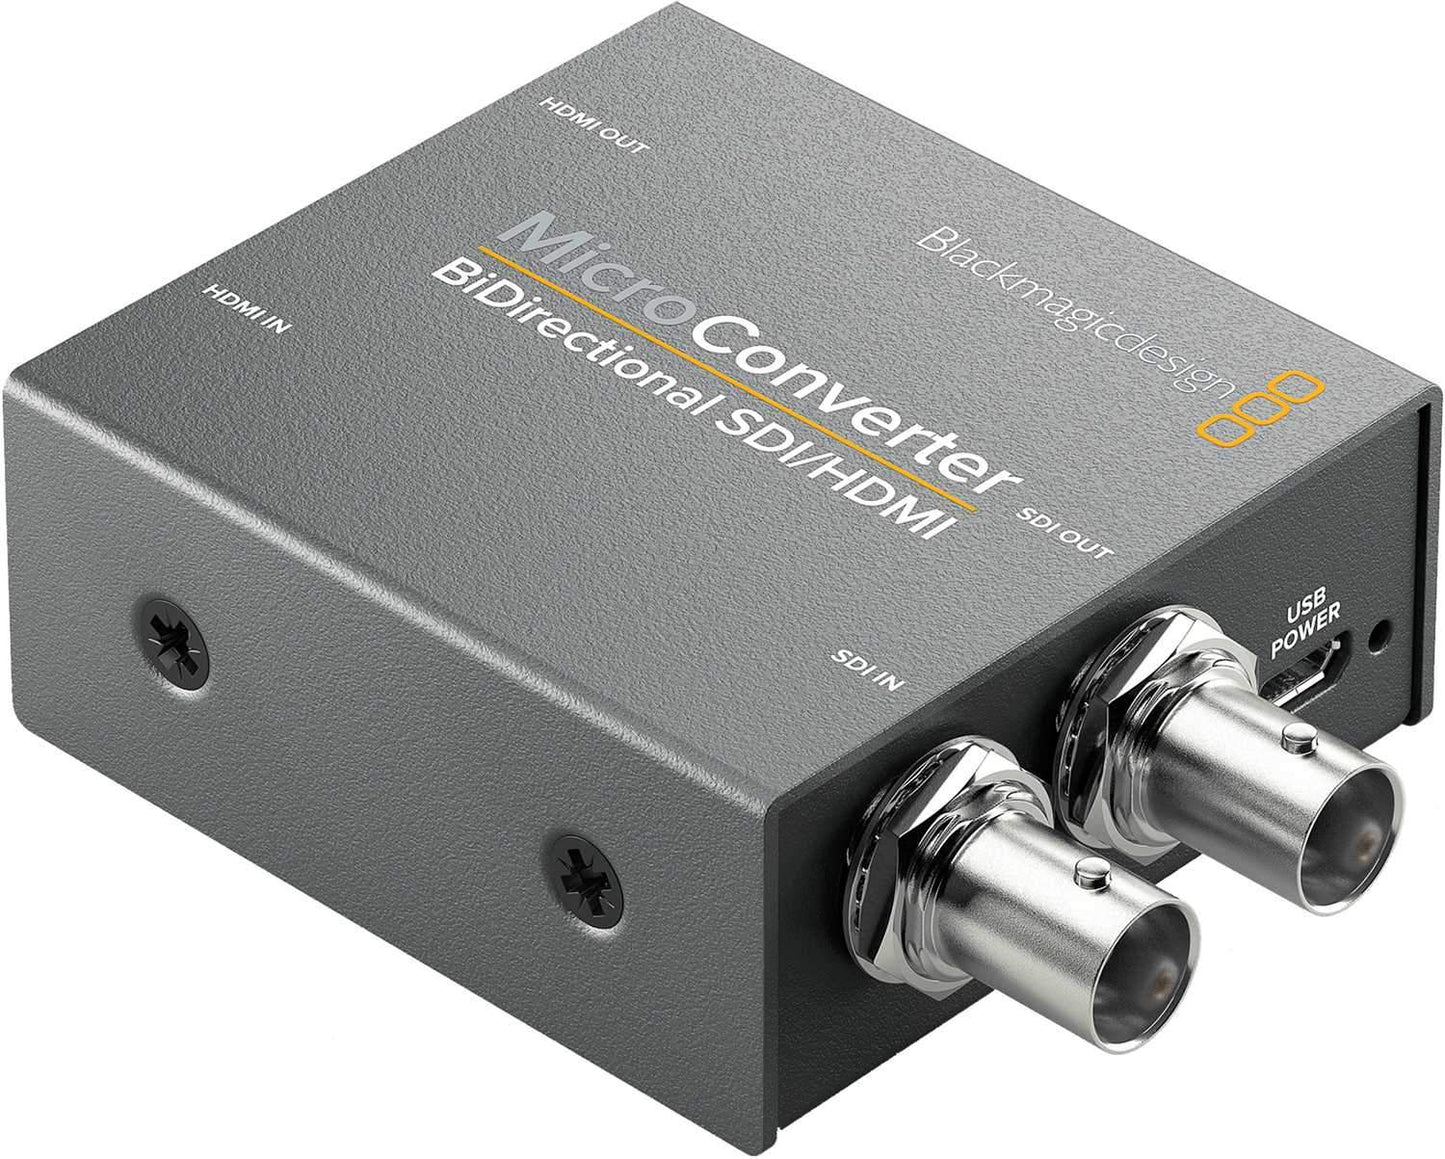 Blackmagic Design Micro Converter BiDirectional SDI-HDMI - ProSound and Stage Lighting